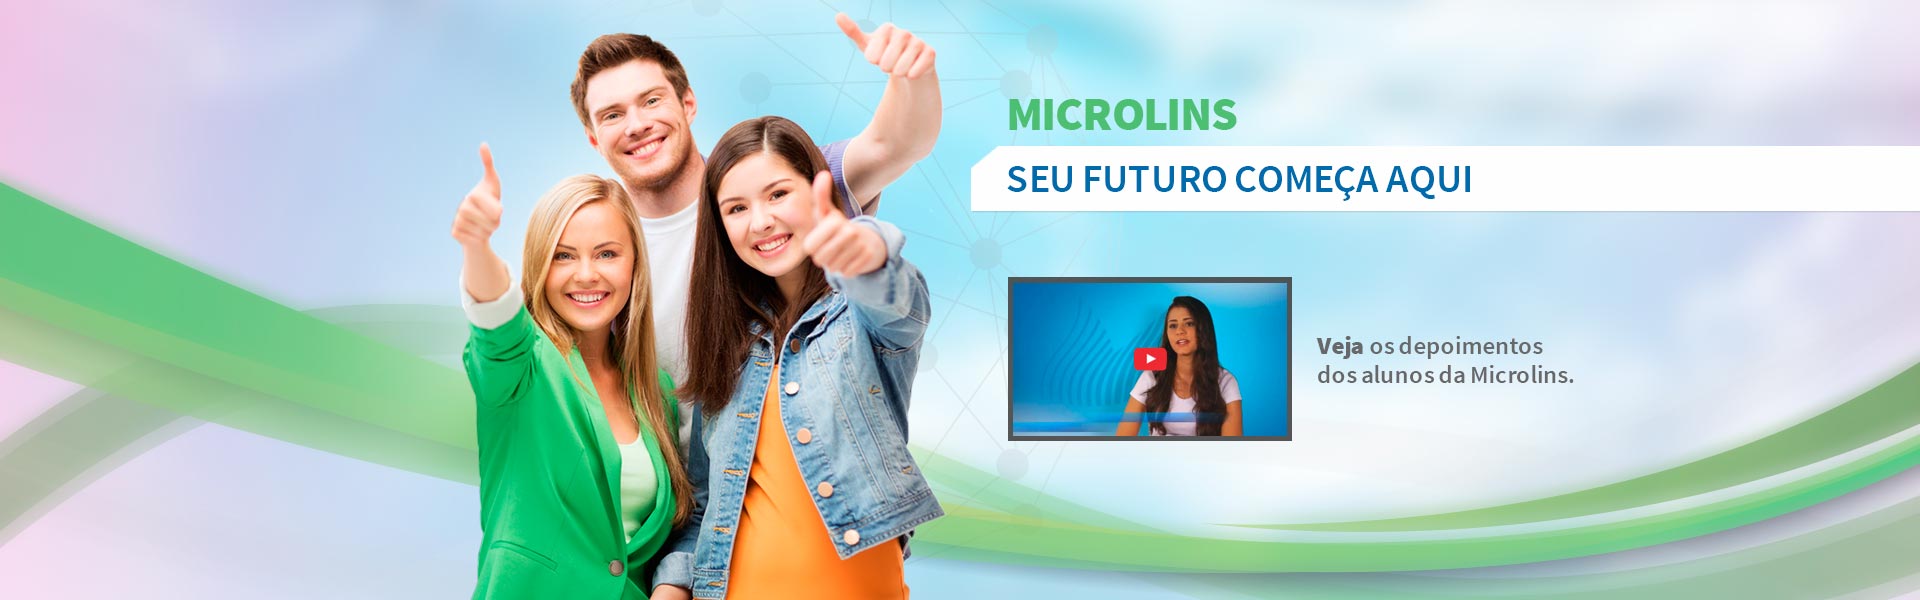 microlins-banner-depoimentos